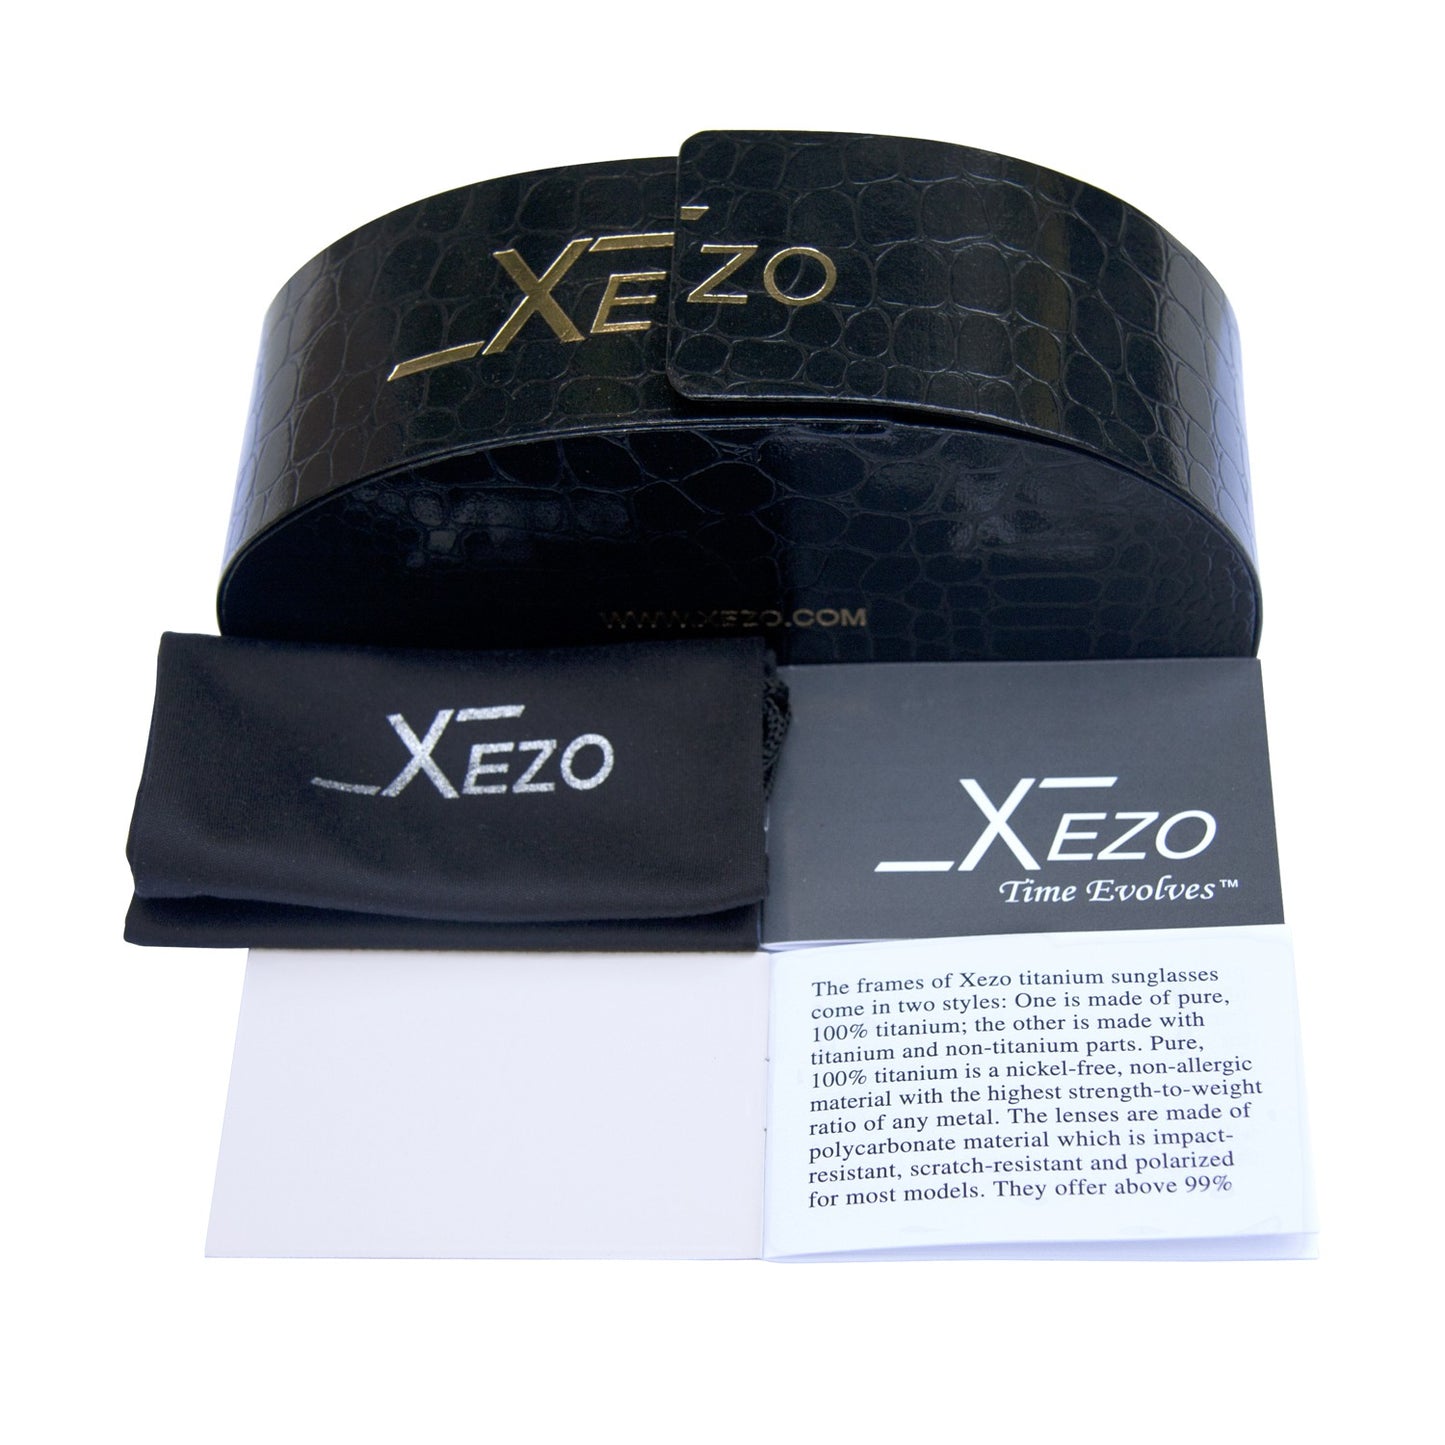 Xezo - Black gift box, Black bag, and certificate of a pair of Air Commando 2400 R sunglasses